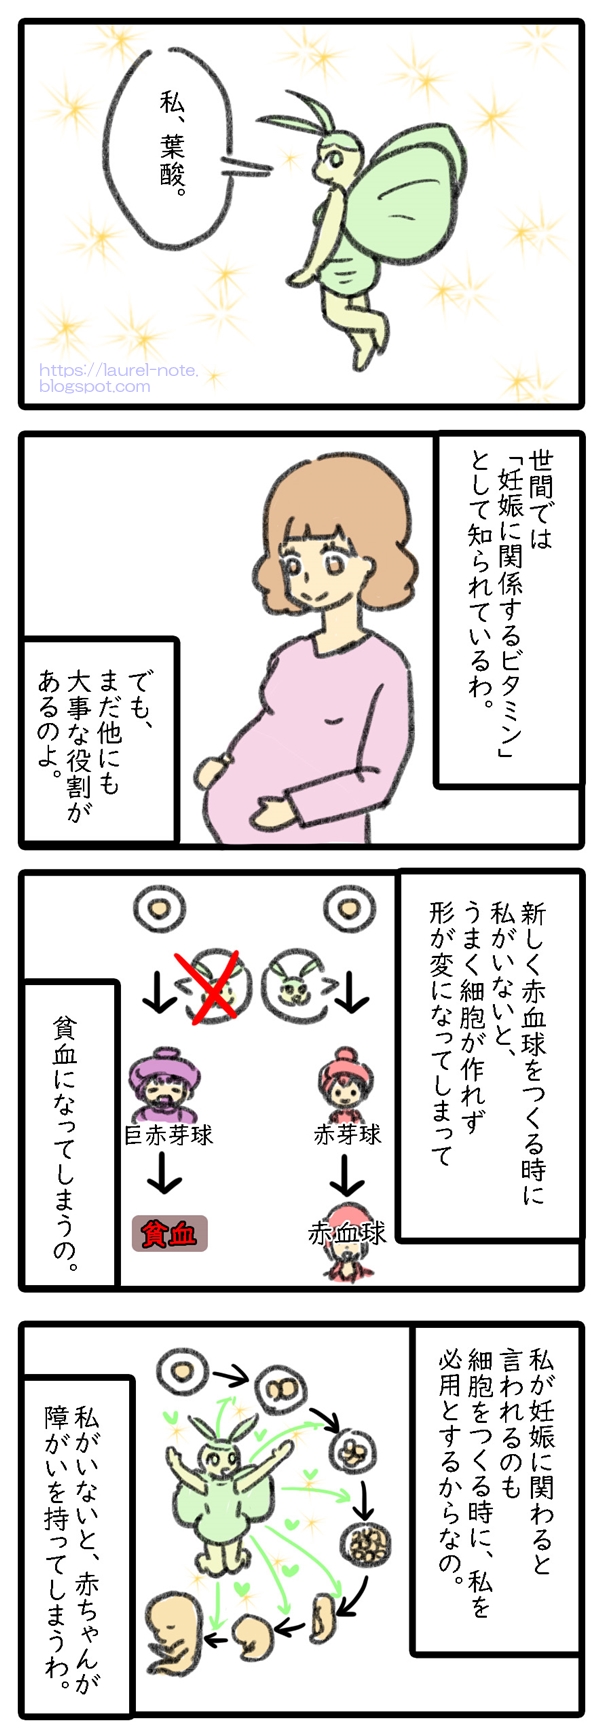 葉酸漫画(紹介と赤芽球)